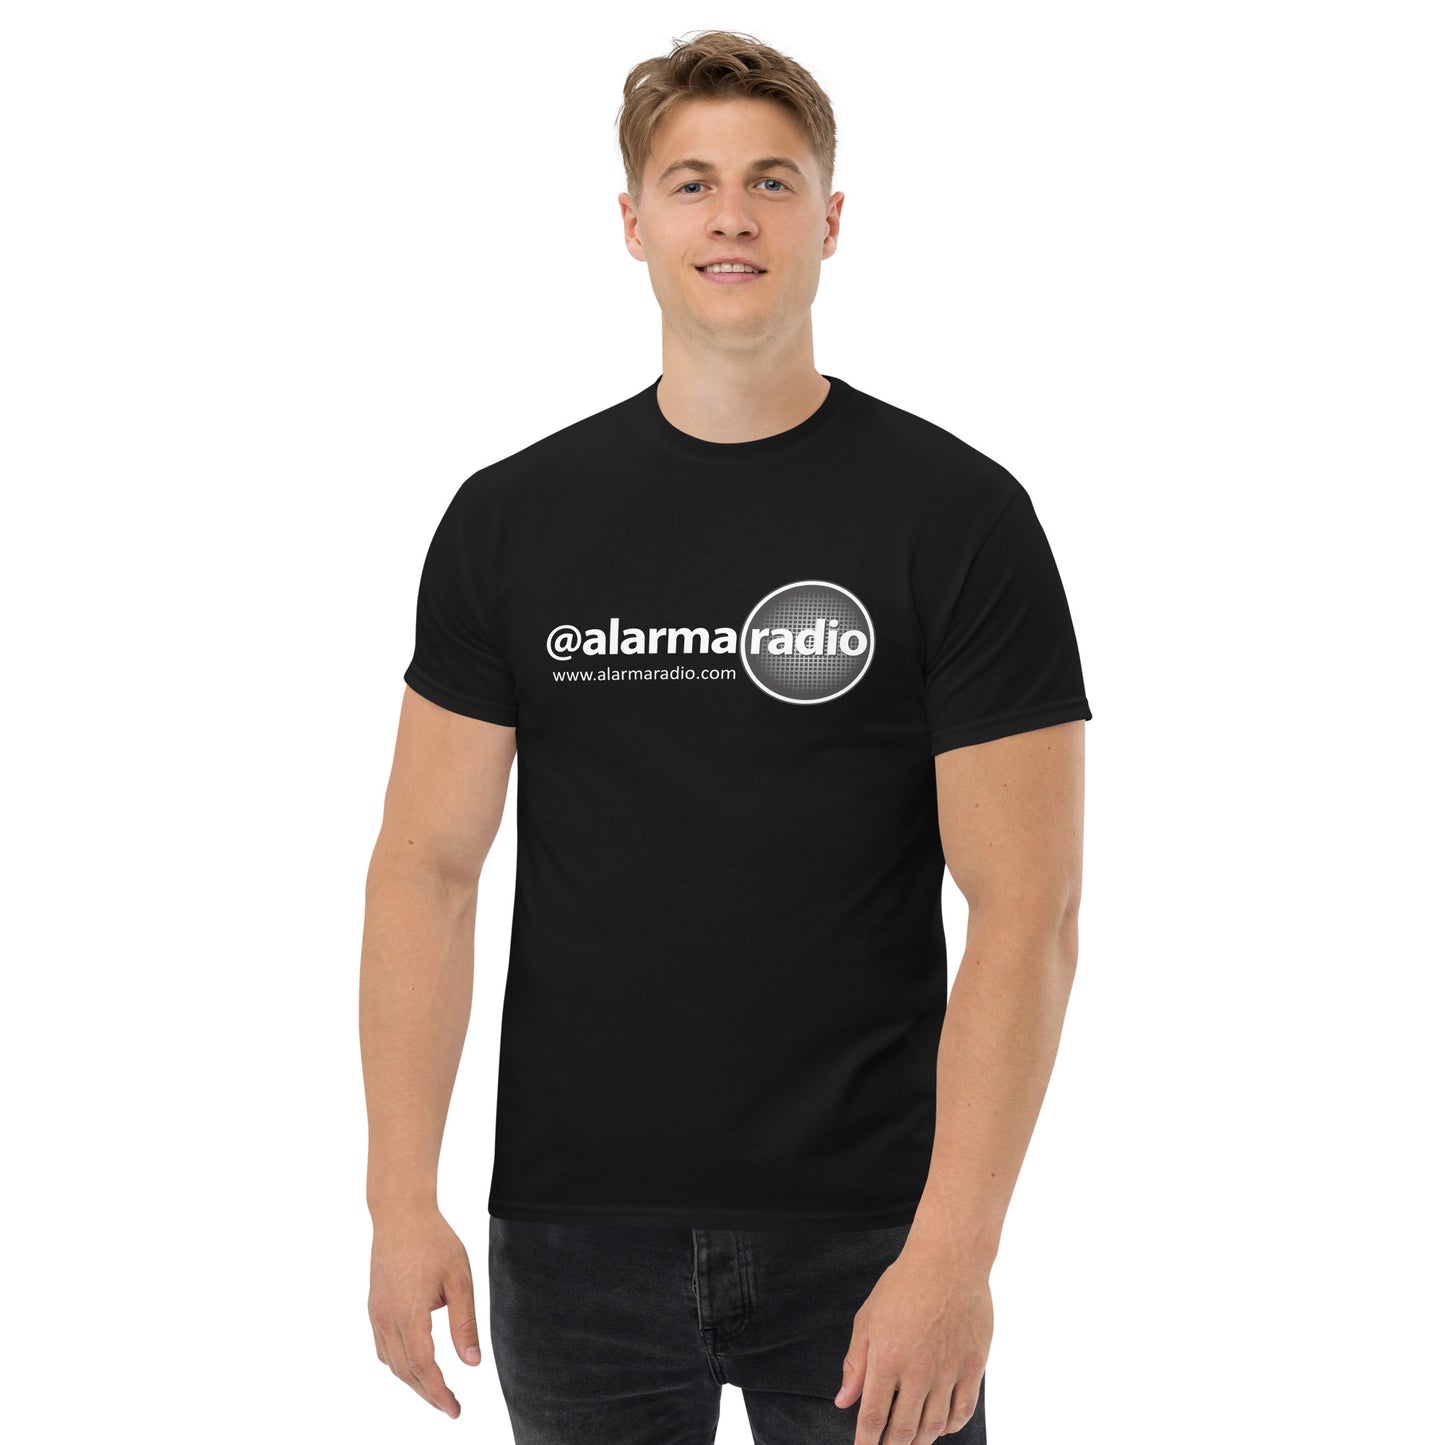 Alarmaradio - Camiseta clásica